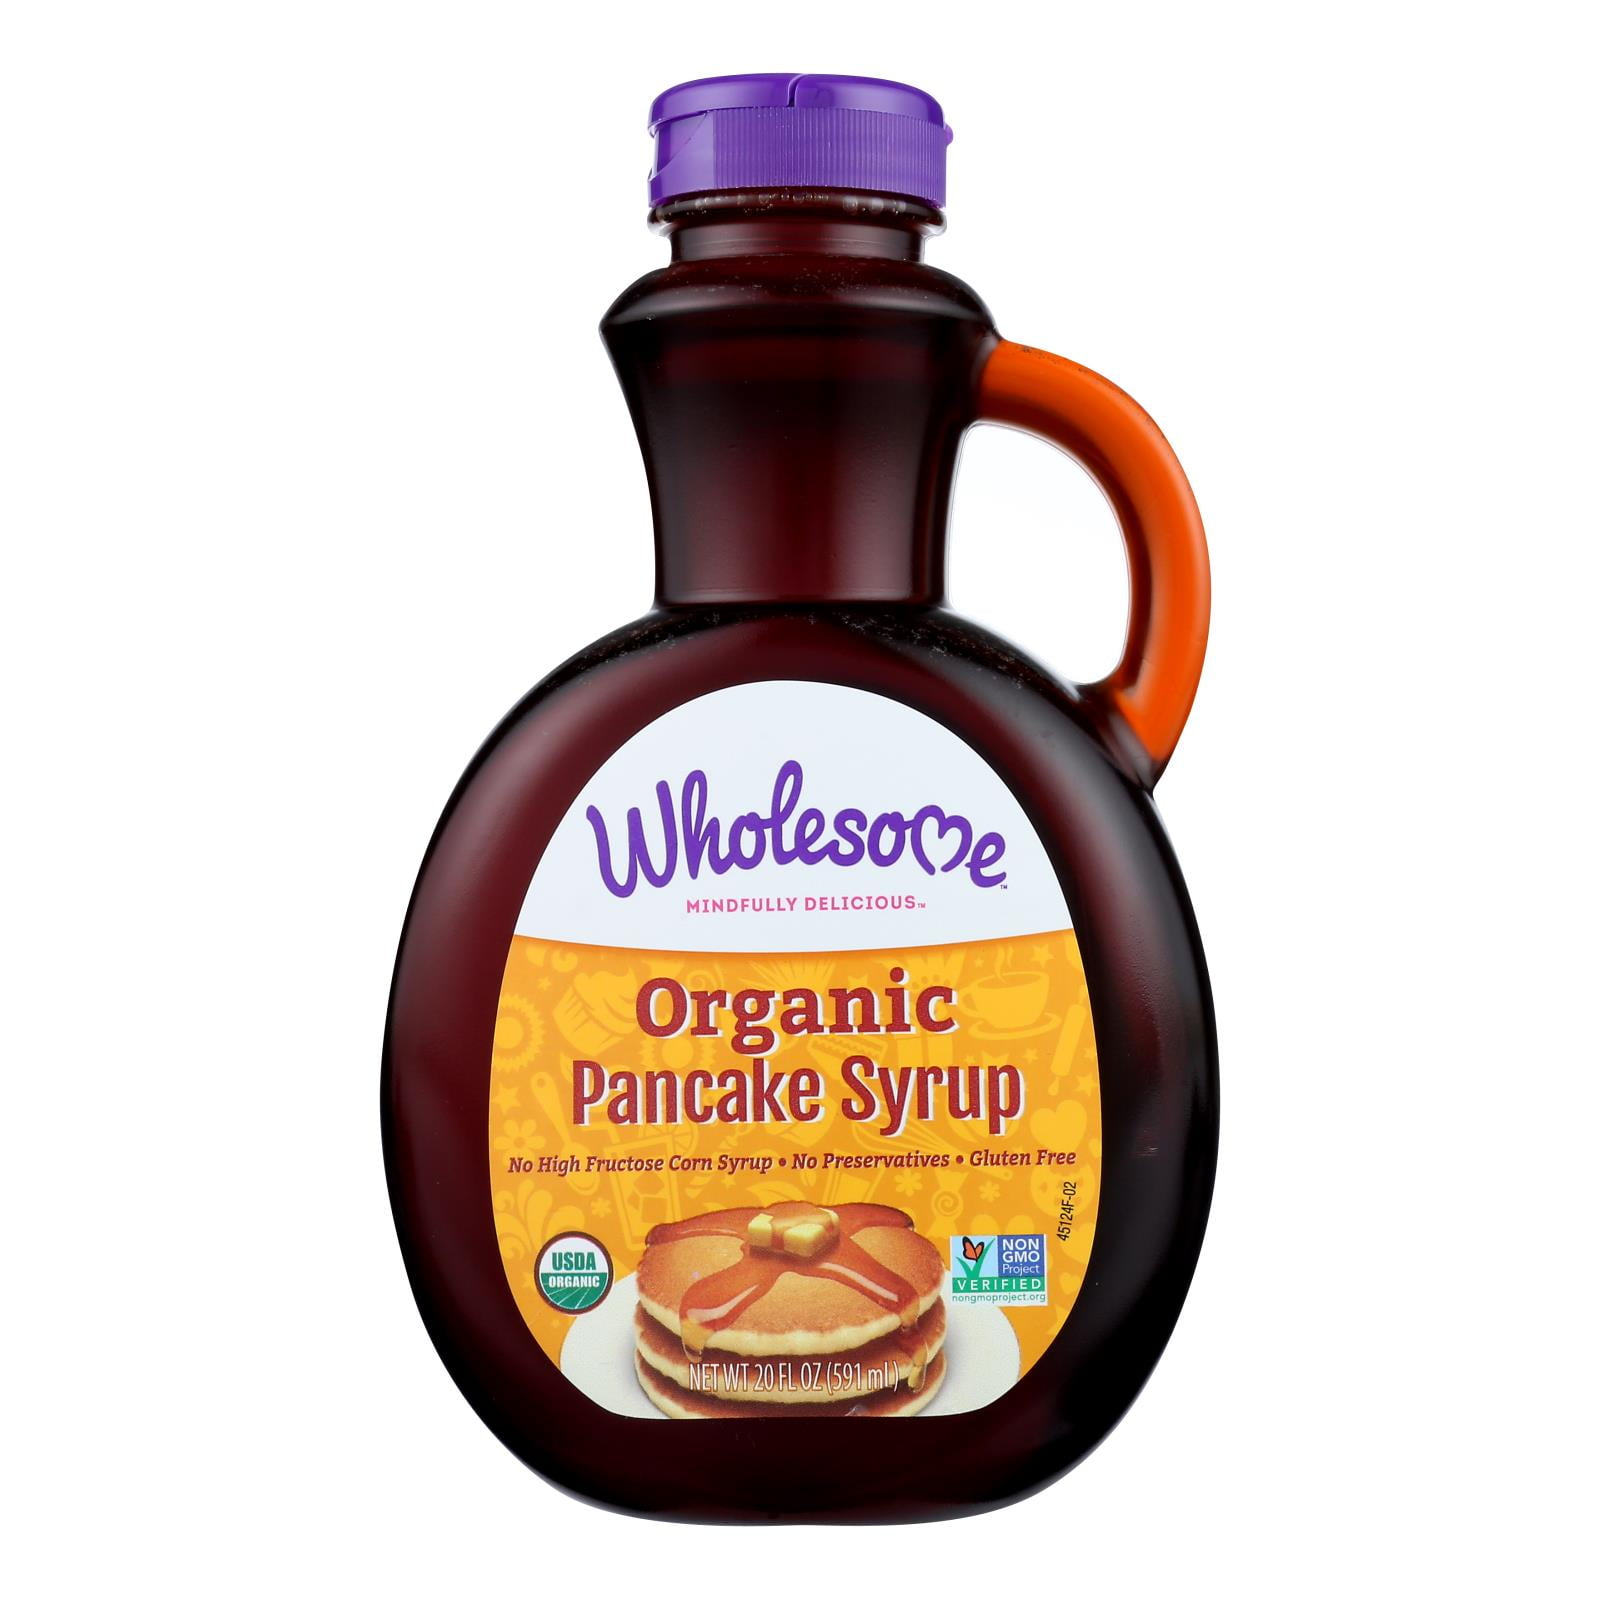 Wholesome Organic Pancake Syrup, 20 Oz - Walmart.com - Walmart.com